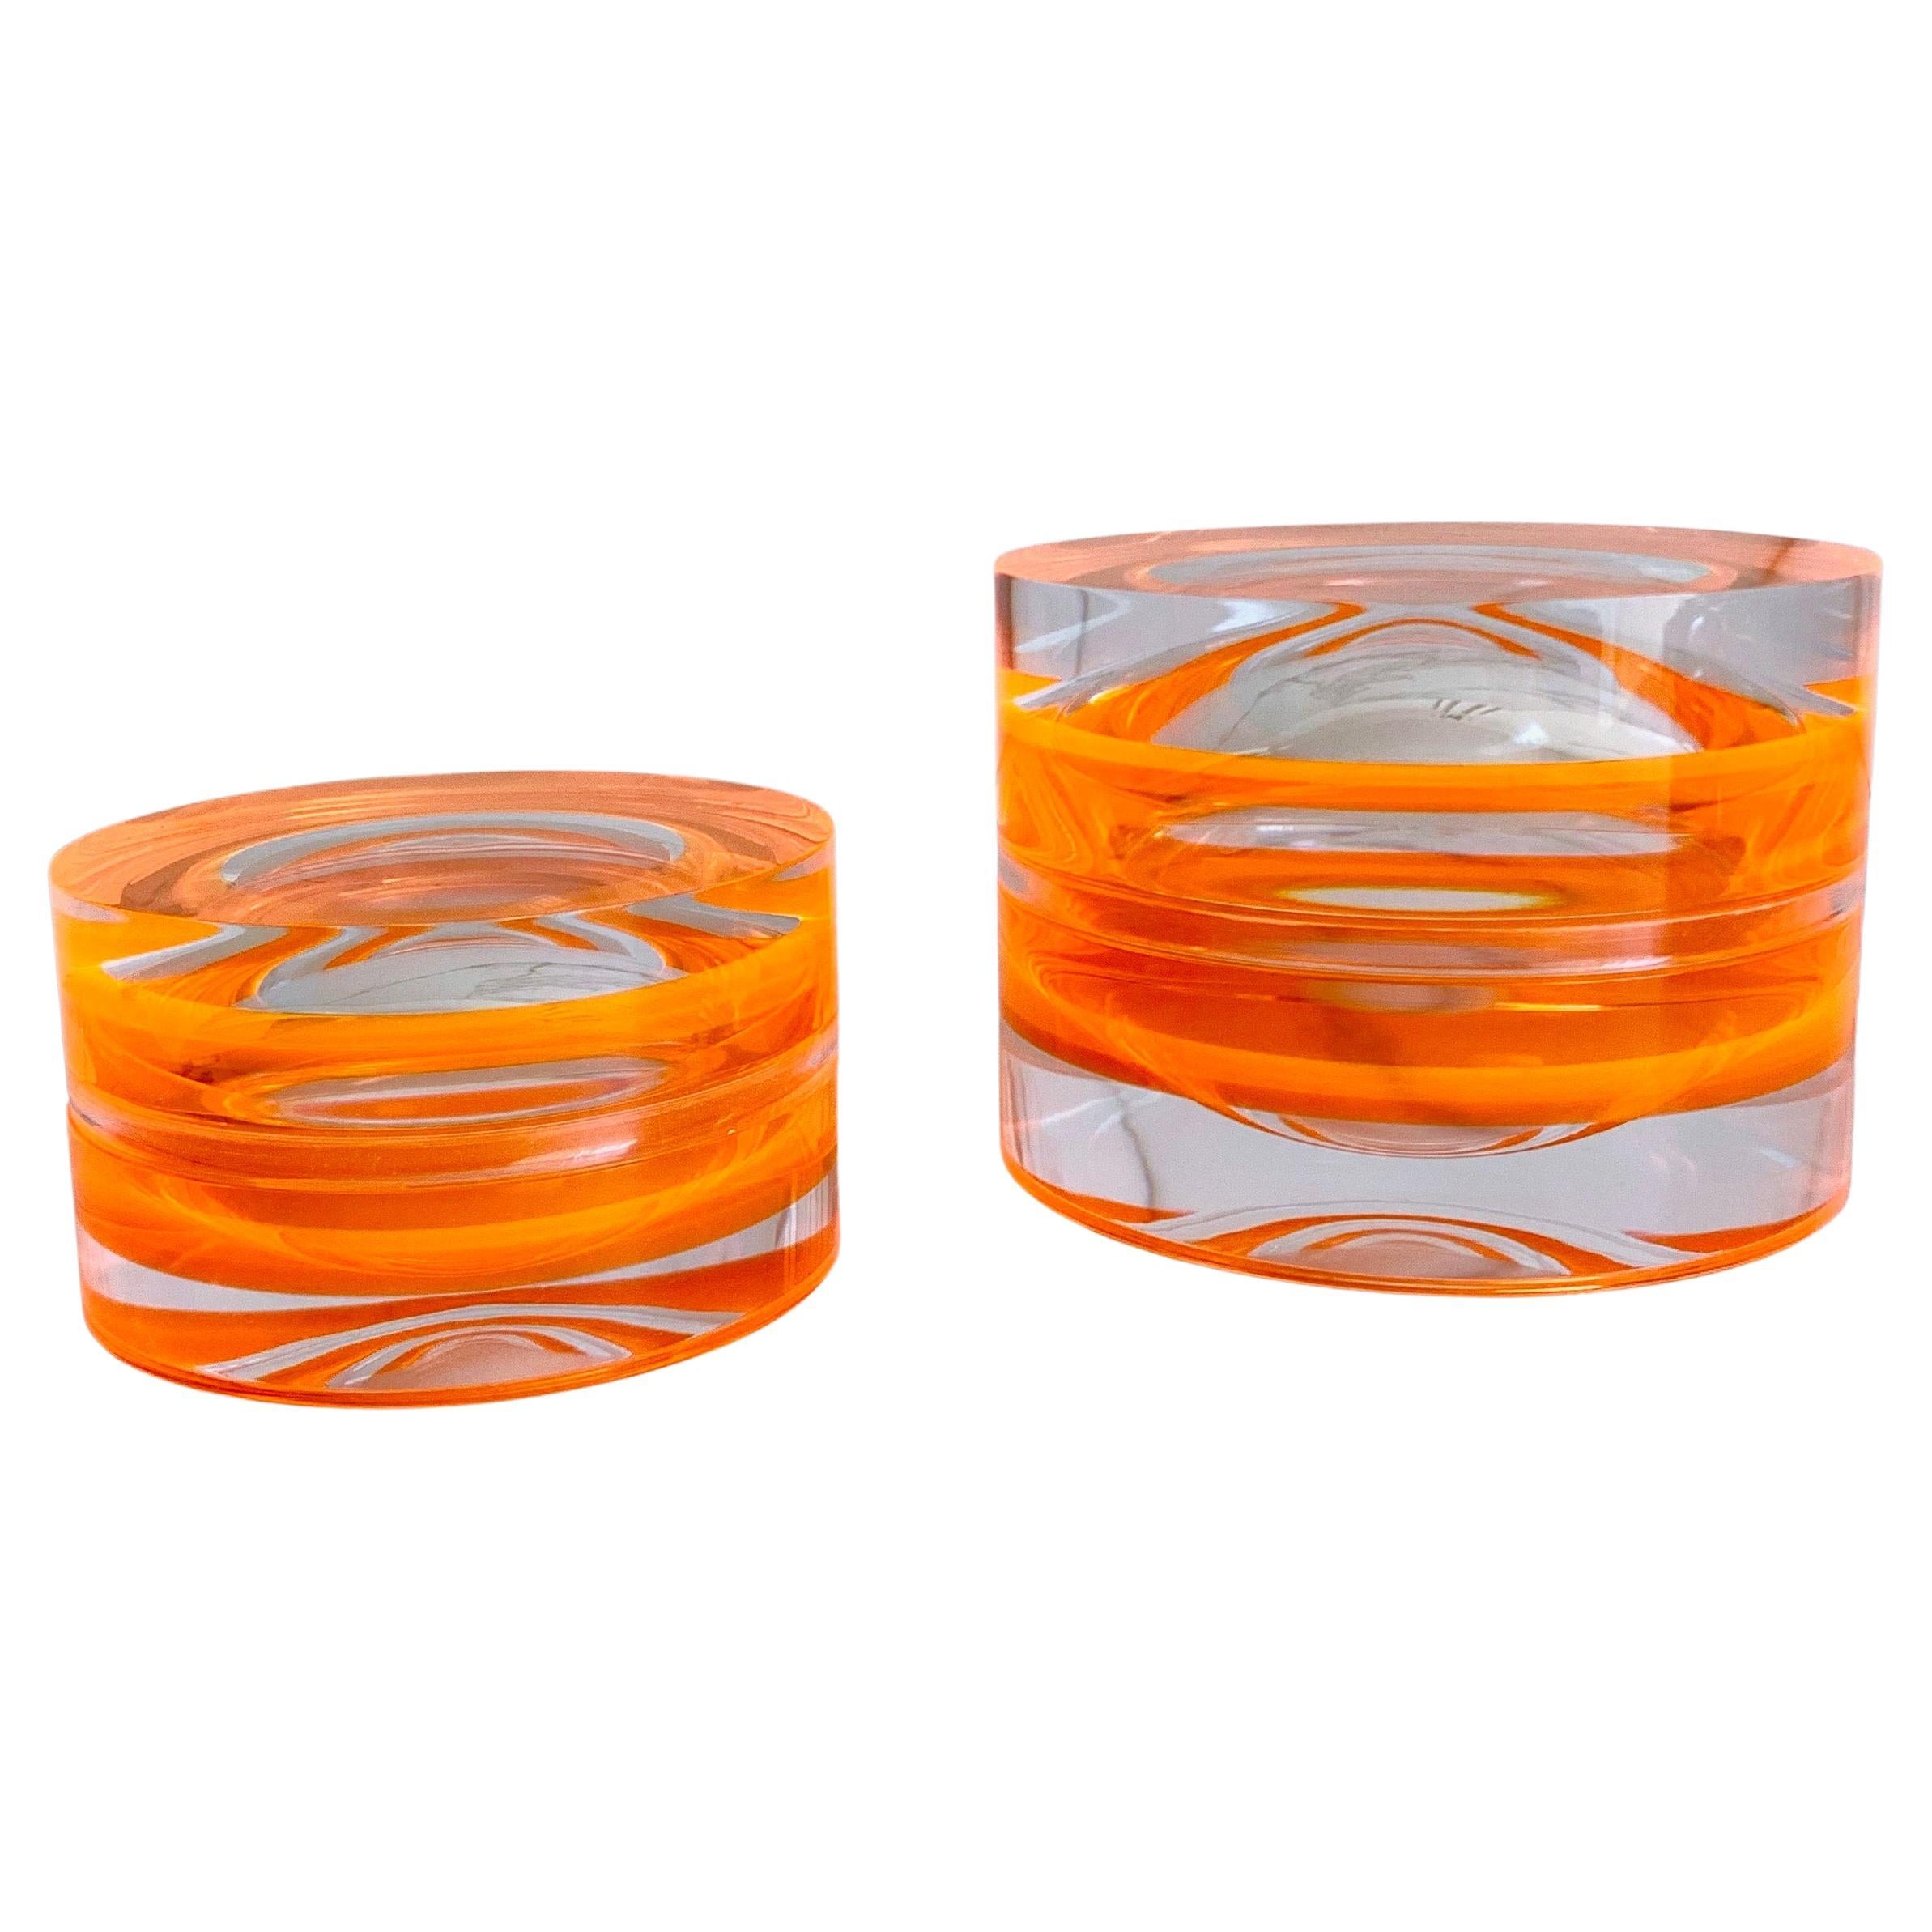 Petite boîte ronde en acrylique orange fluo de Paola Valle